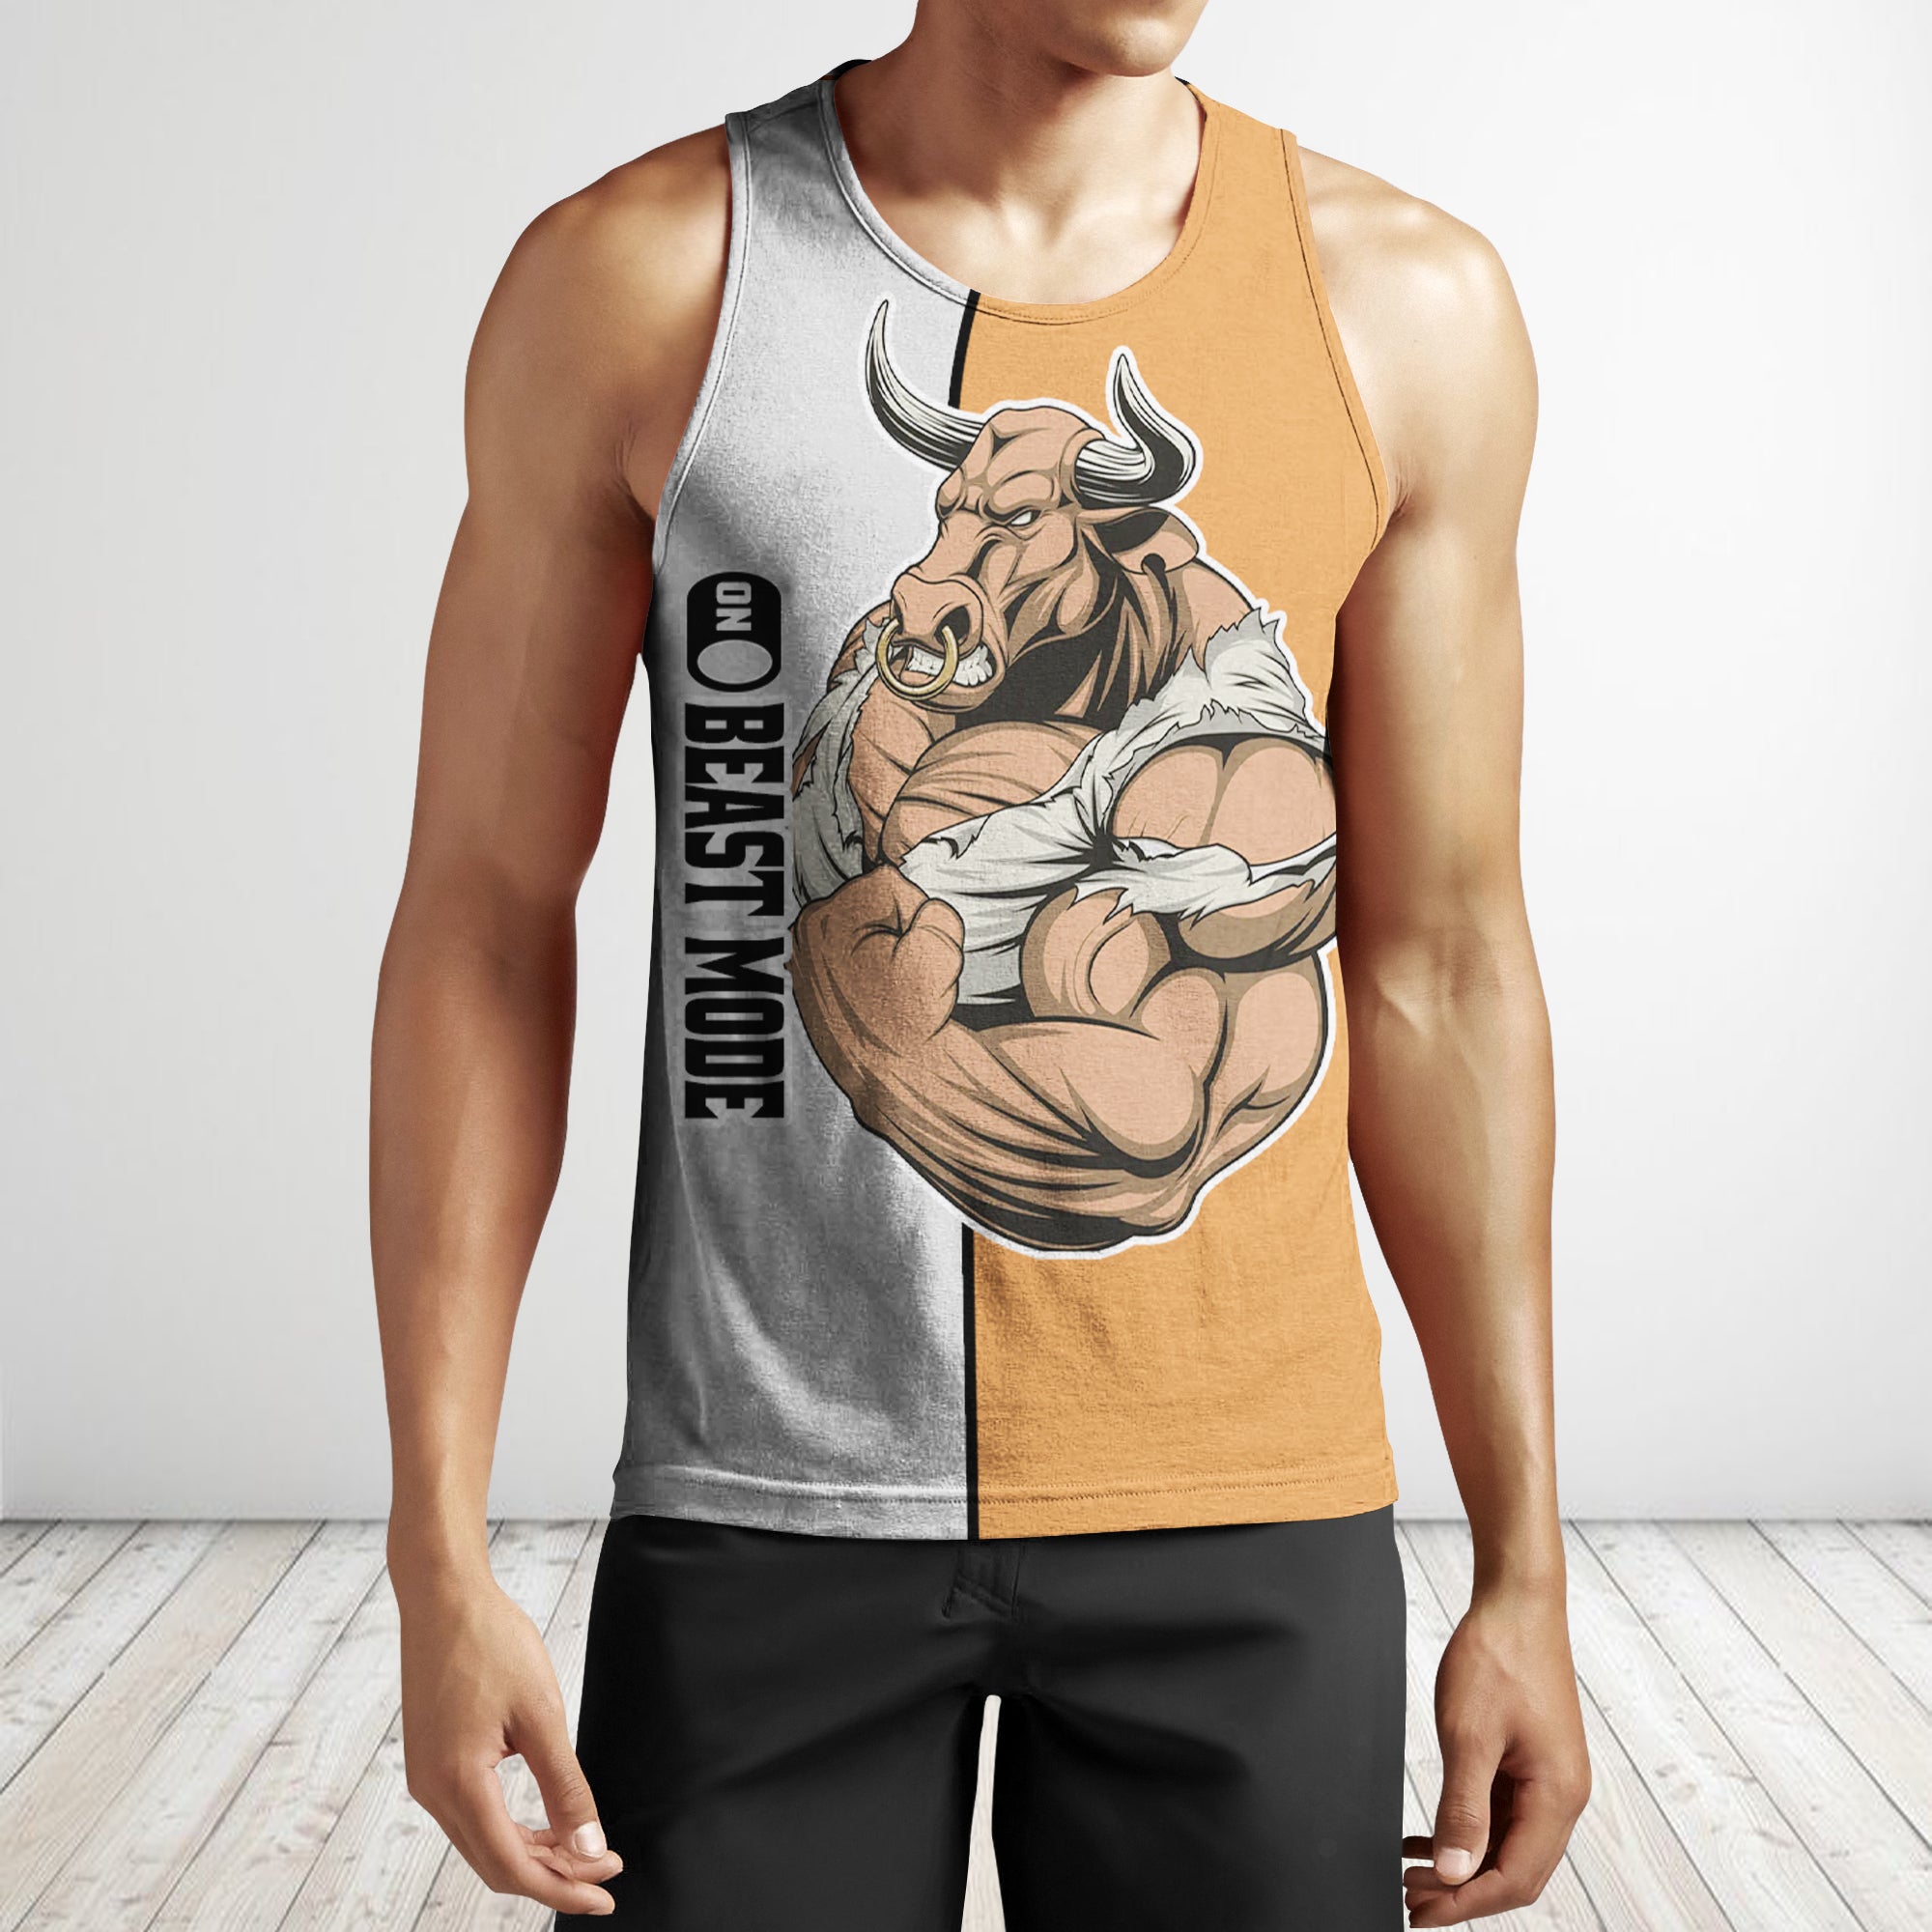 Men Gym Tank Tops Motivational Shirts Bull Beast Mode On